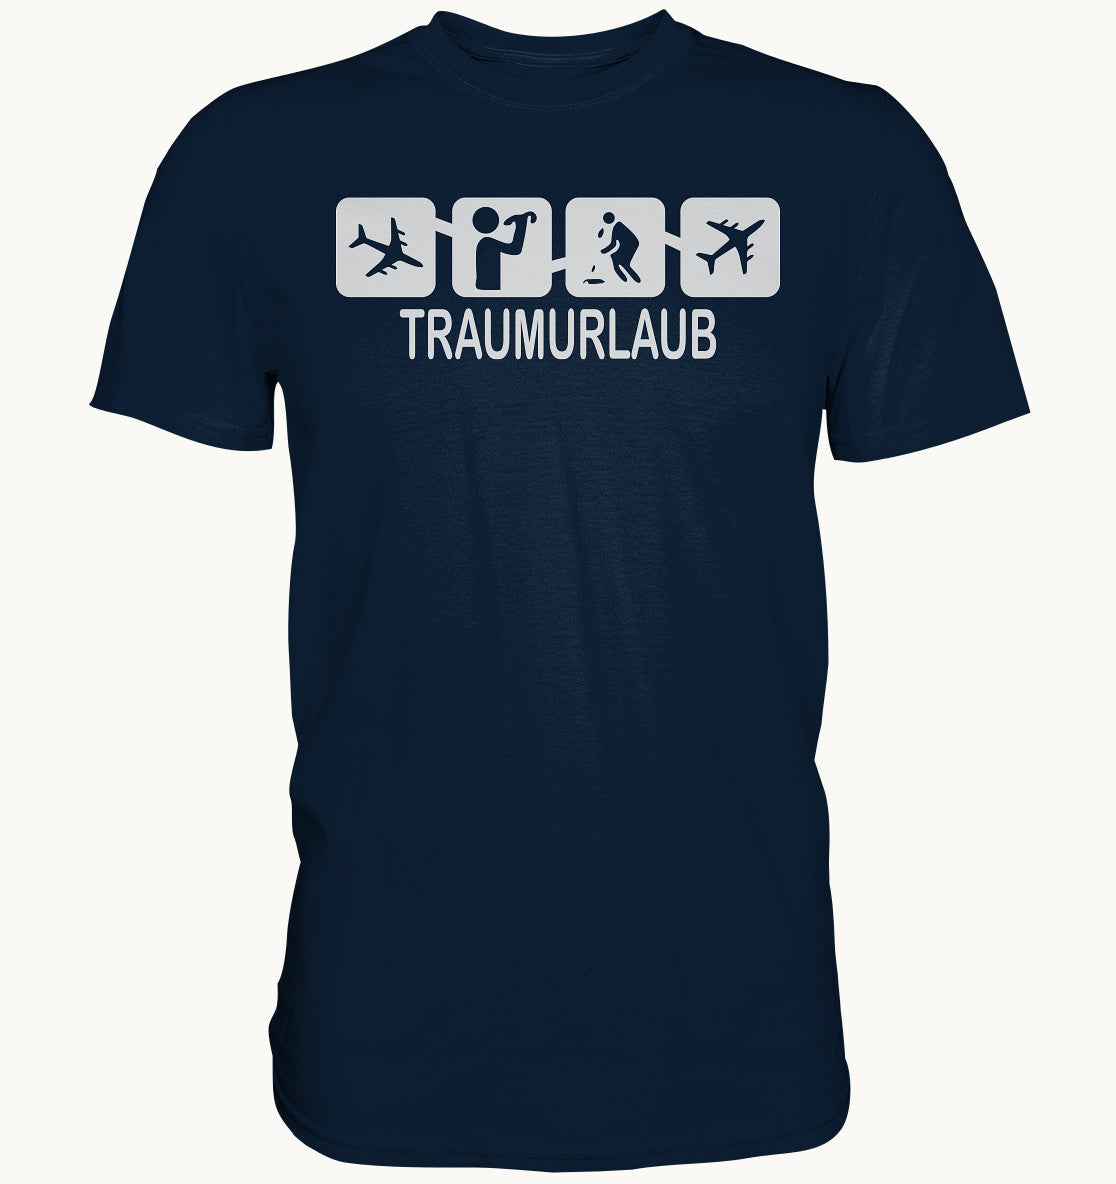 Traumurlaub - Premium Shirt - Baufun Shop